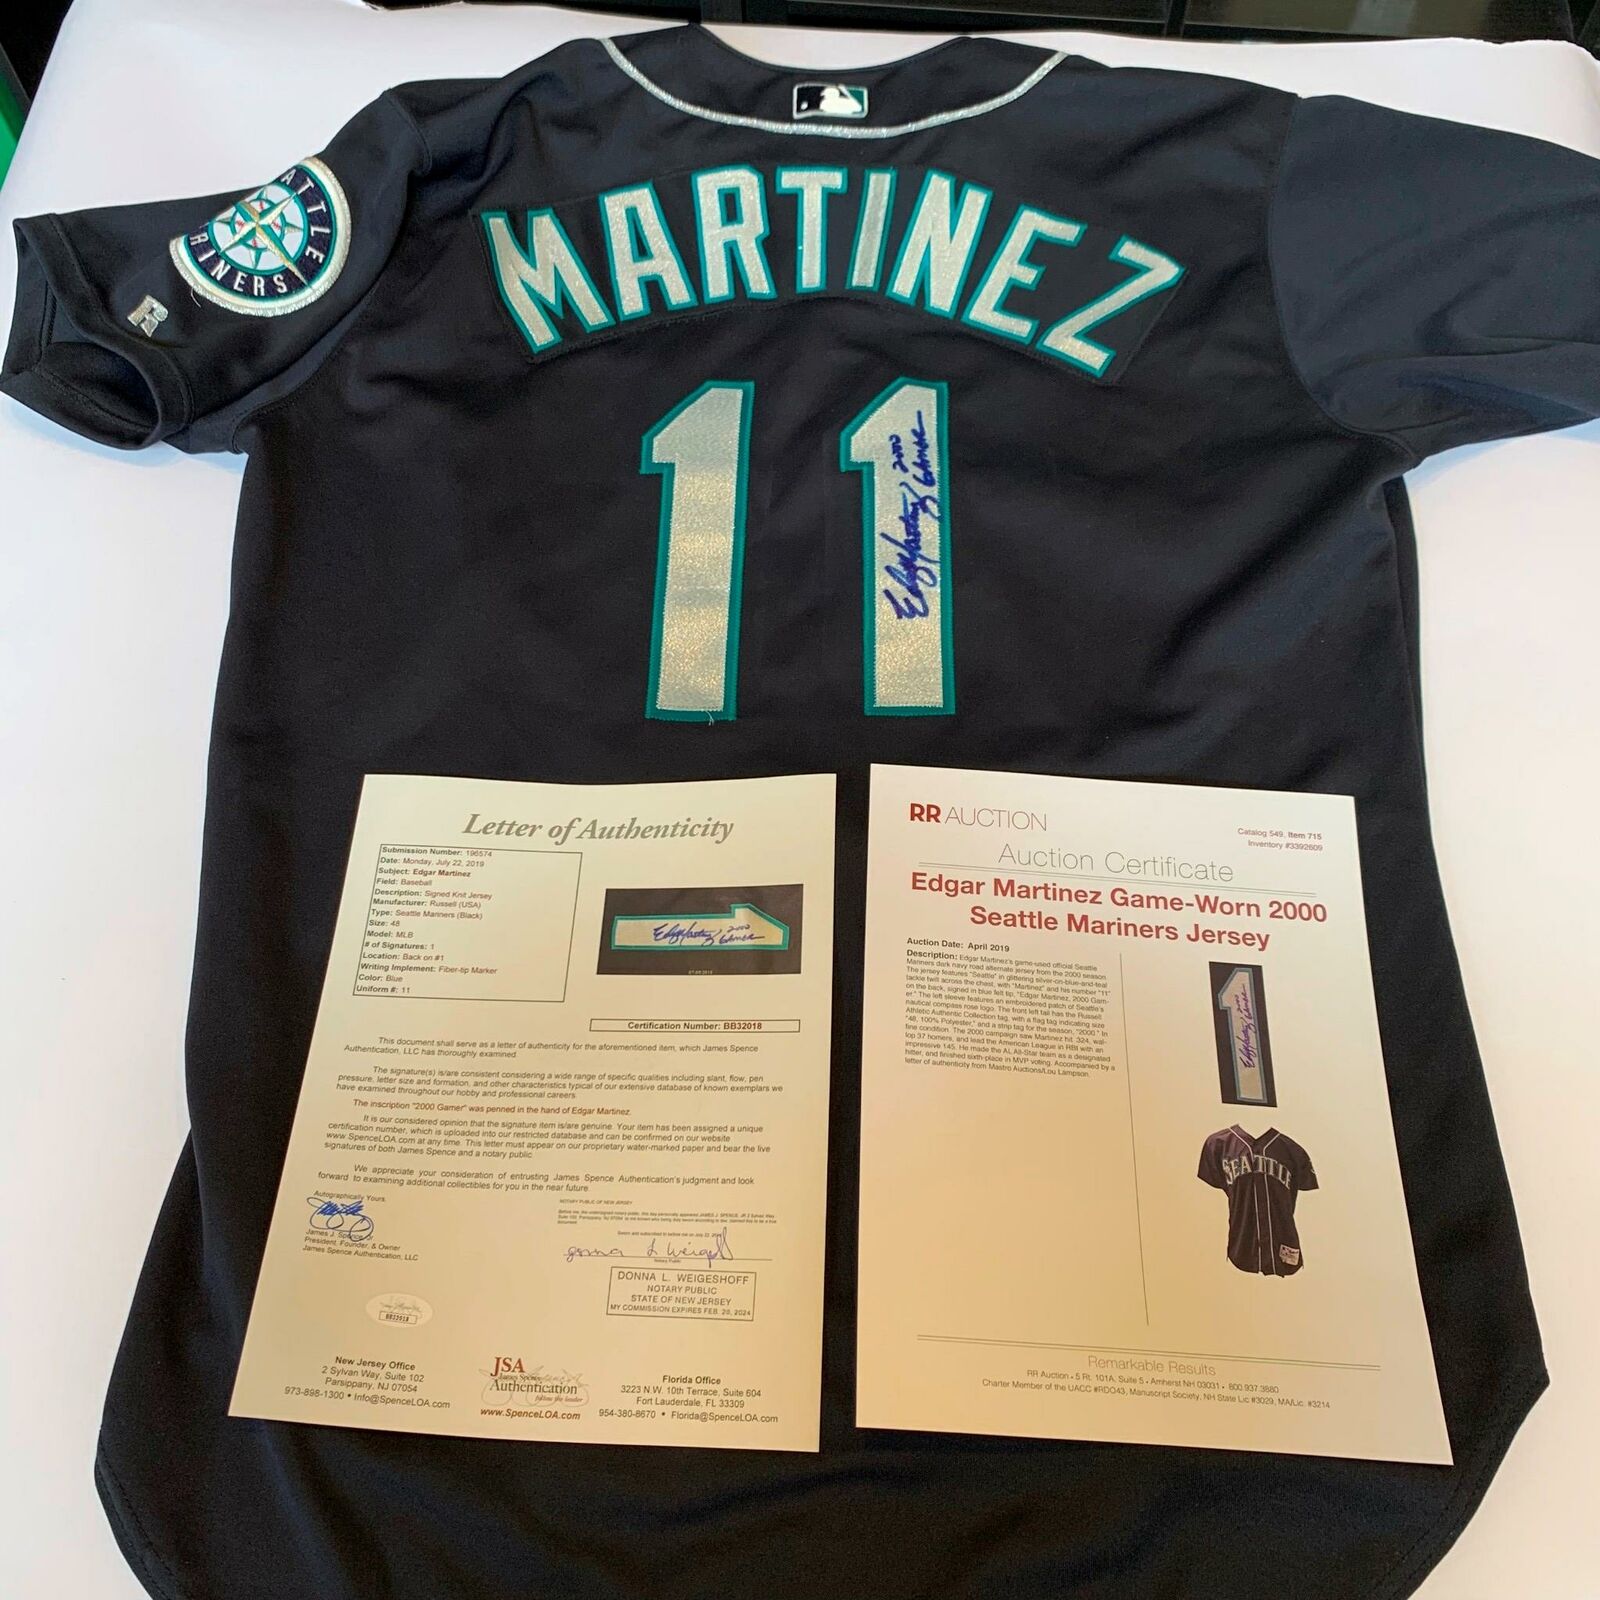 Edgar Martinez player worn jersey patch baseball card (Seattle